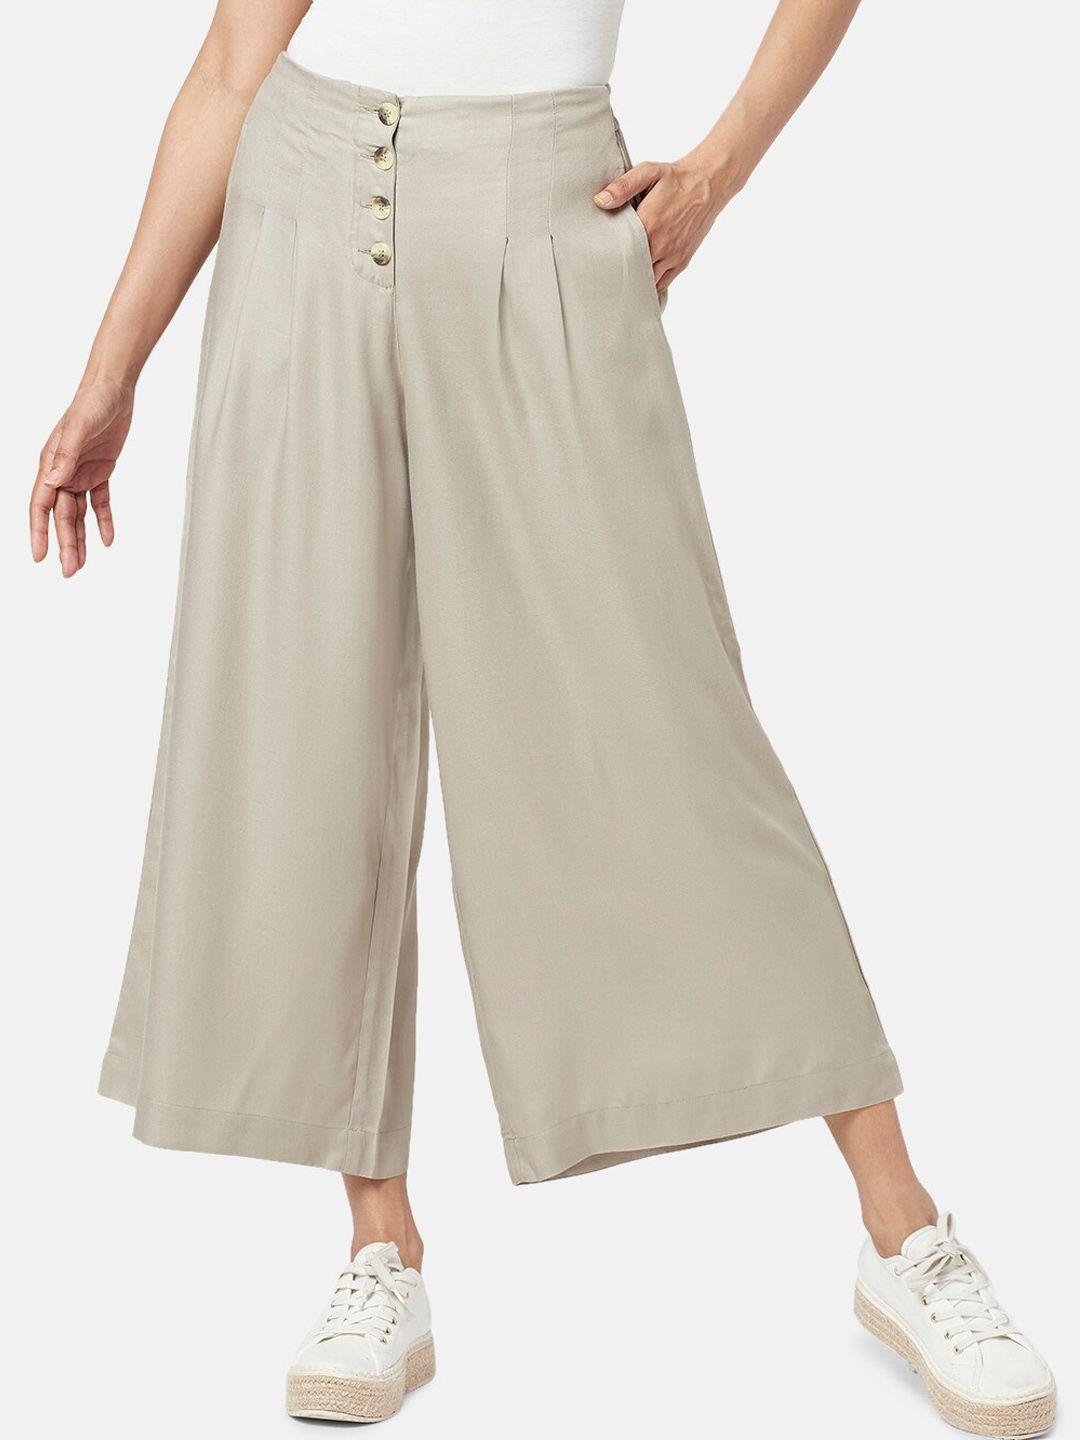 akkriti by pantaloons women pleated culottes trousers